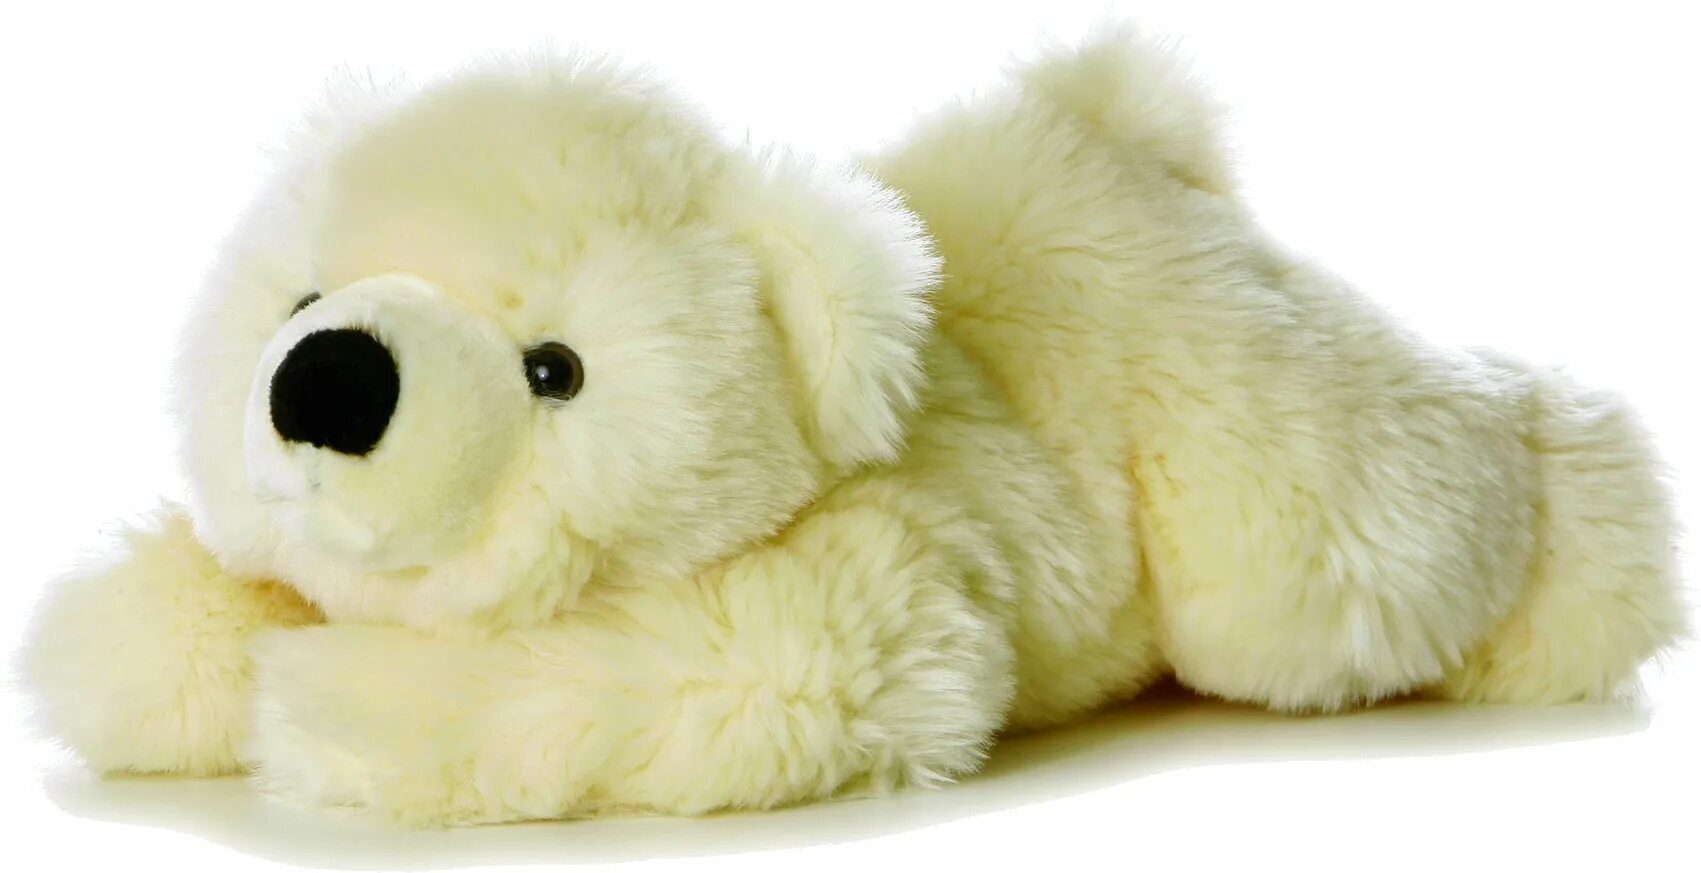 Мягкая игрушка Aurora медведь 20307b. Aurora игрушки медведь белый. Papa Bear плюш игрушка Aurora.